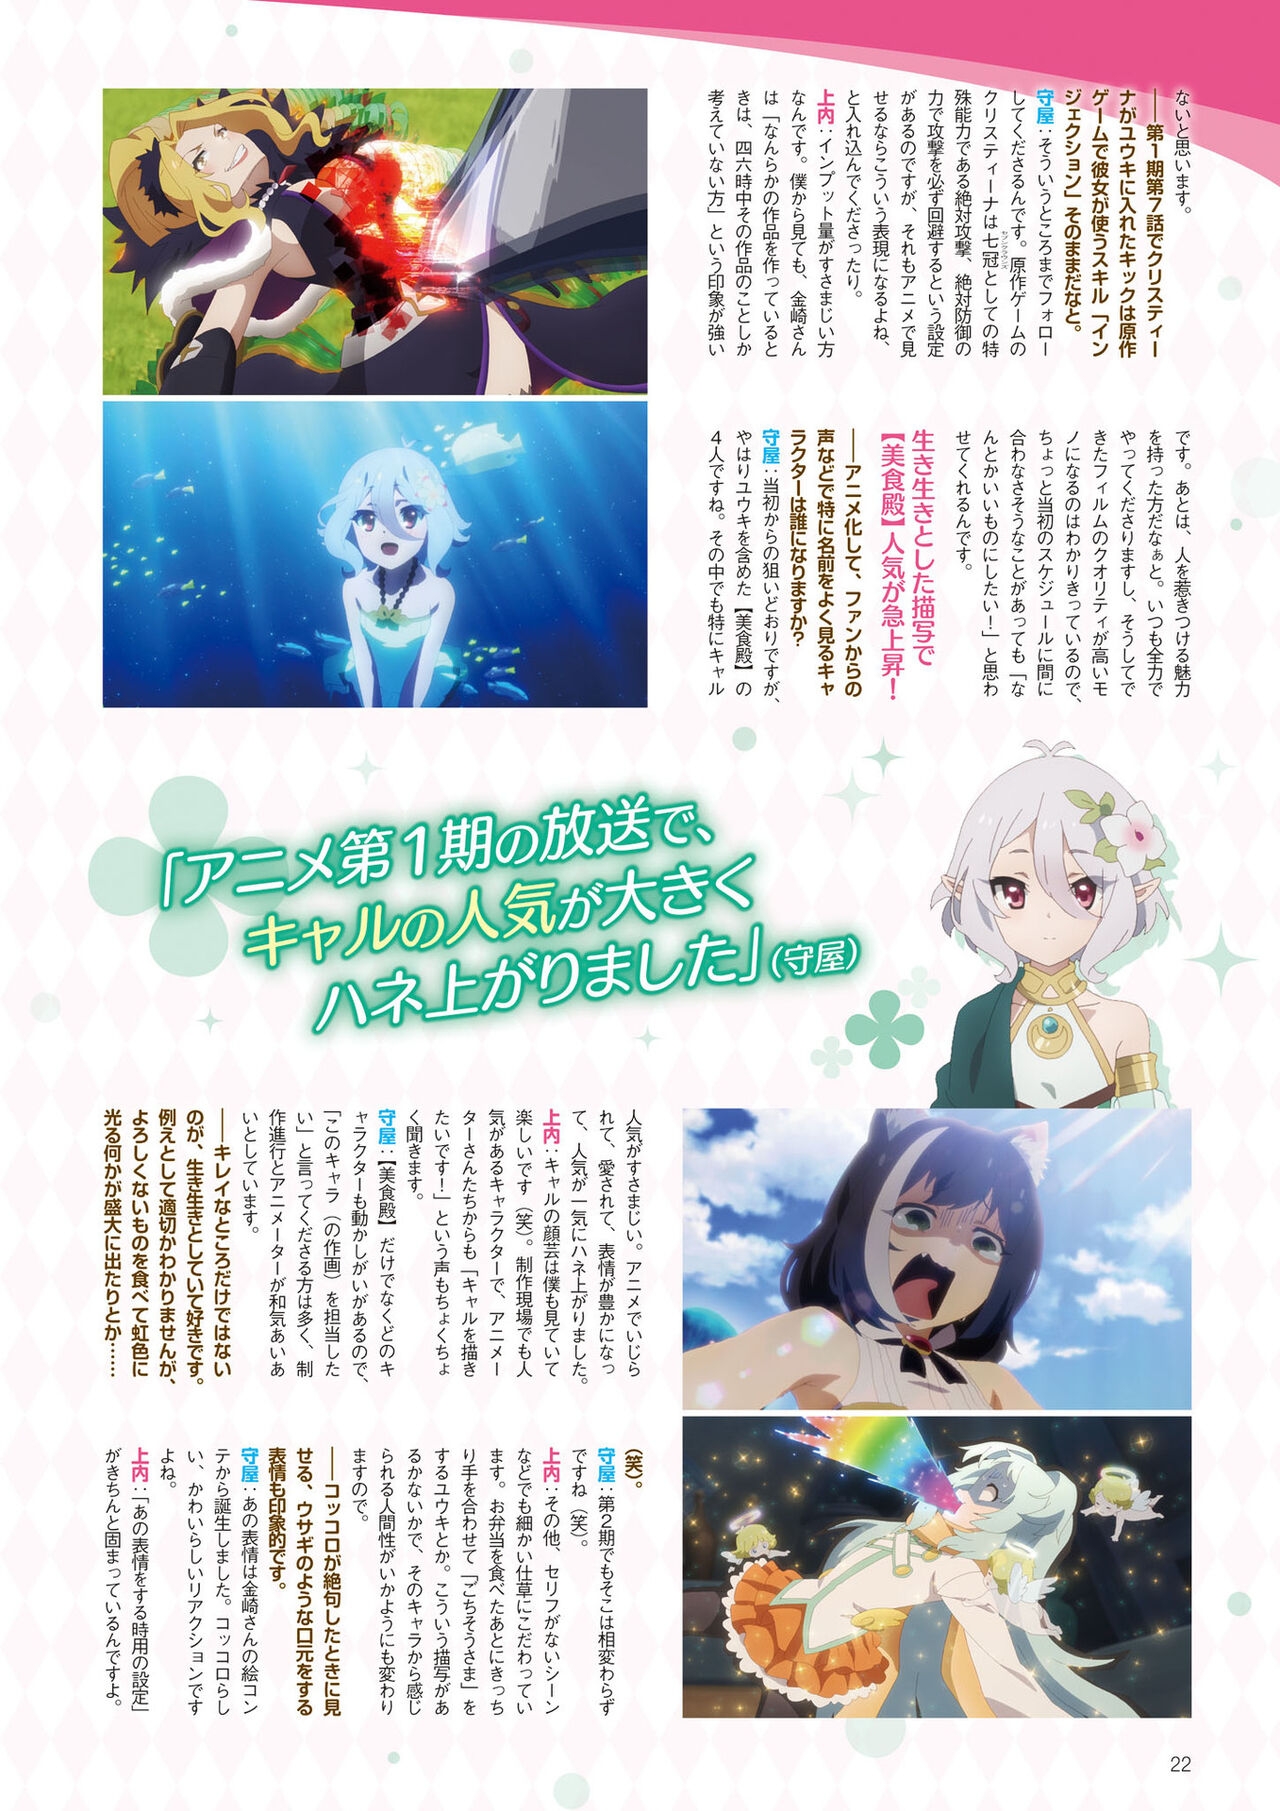 Dengeki G's Magazine #297 - April 2022 19